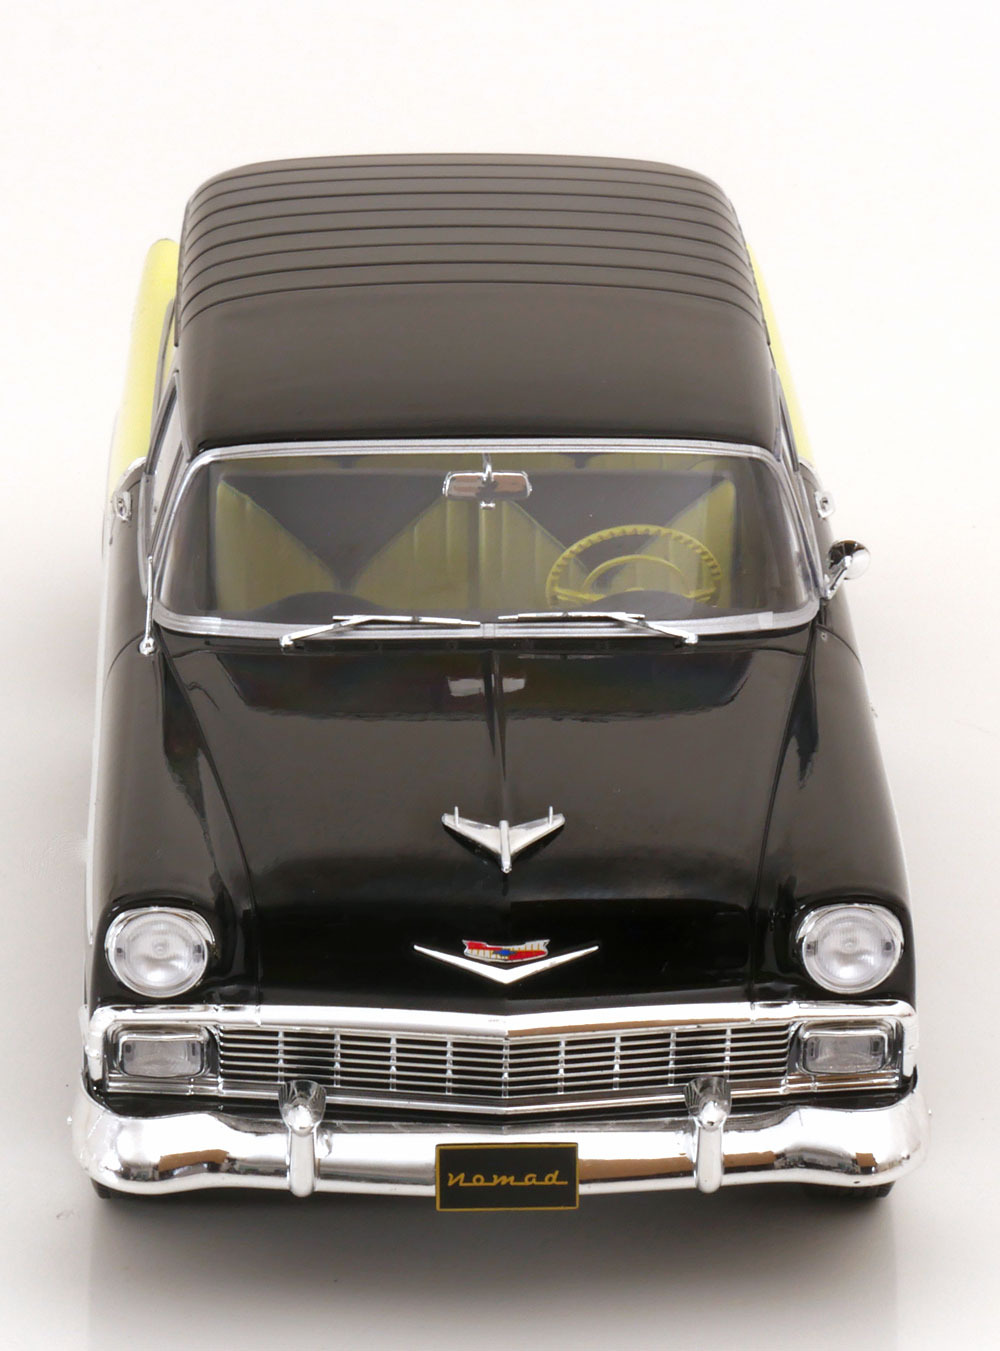 1:18 KK-Scale Chevrolet Bel Air Nomad Custom 1956 black/lightyellow